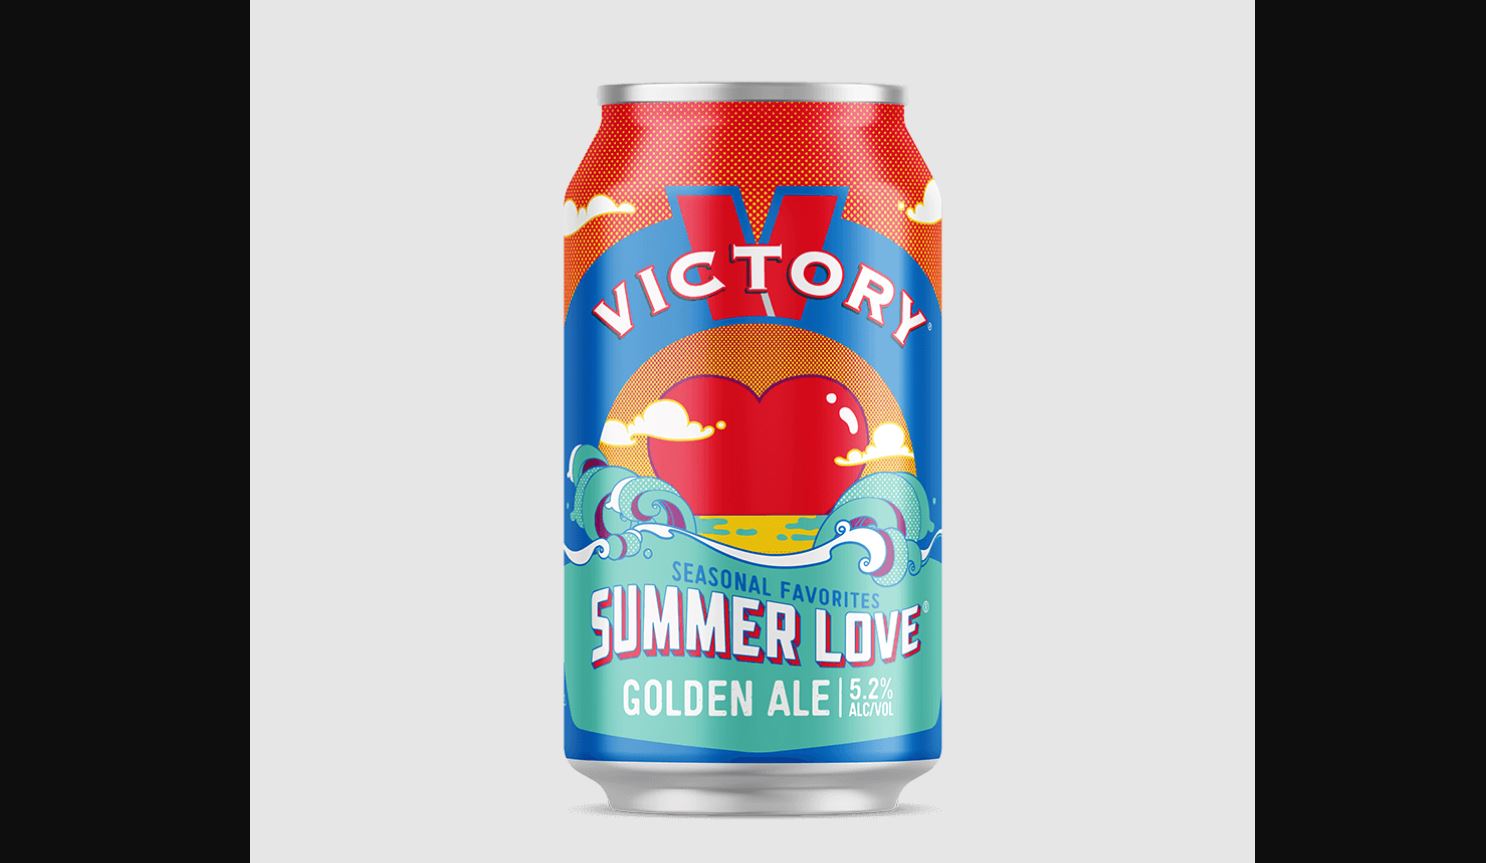 Victory Summer Love